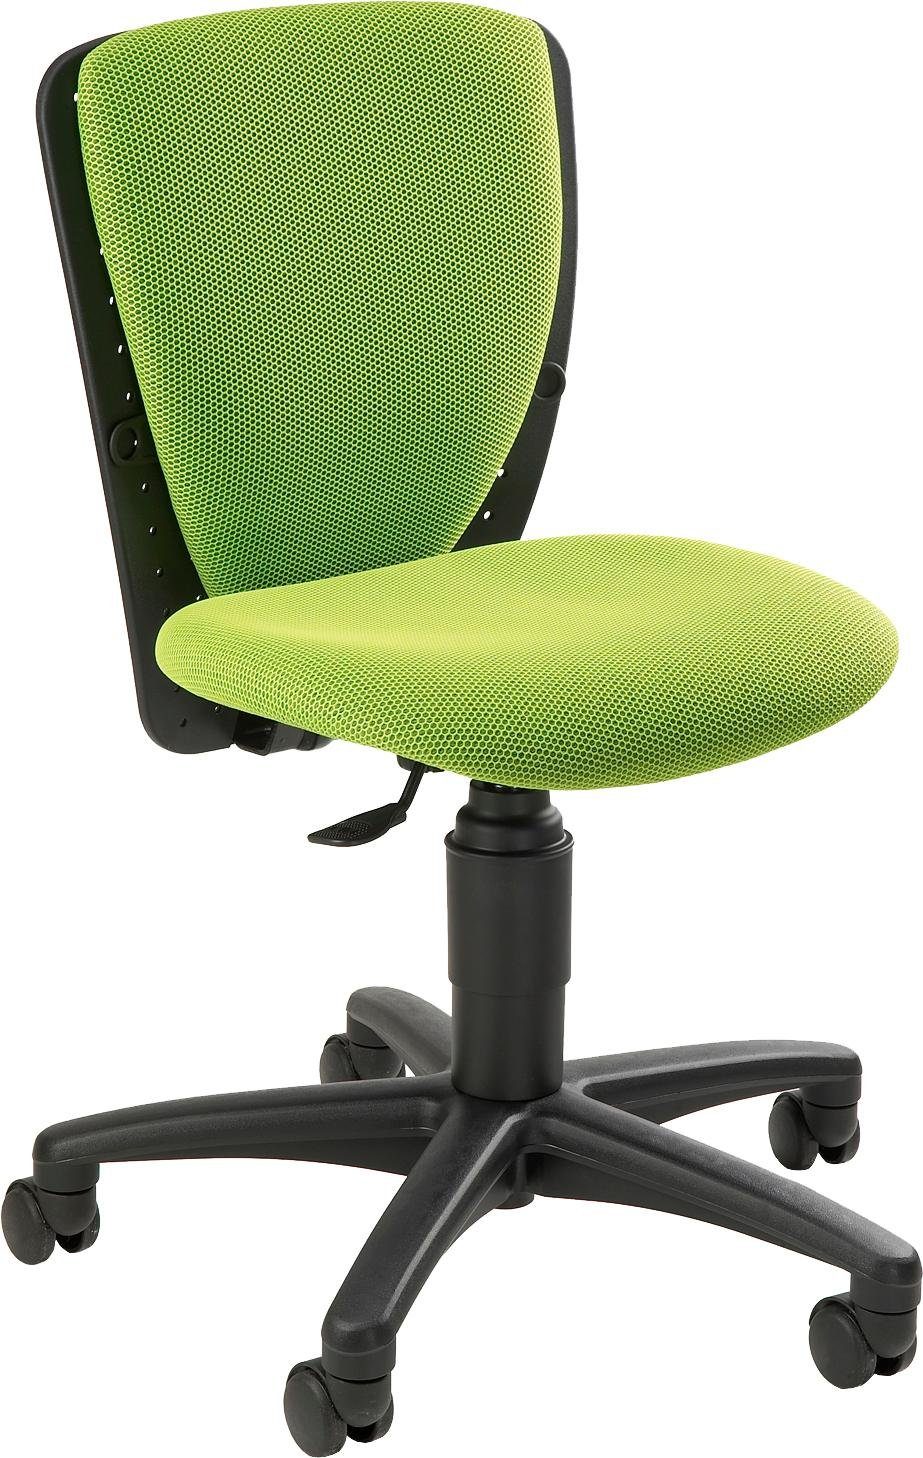 S'cool TOPSTAR Bürostuhl grün-schwarz High